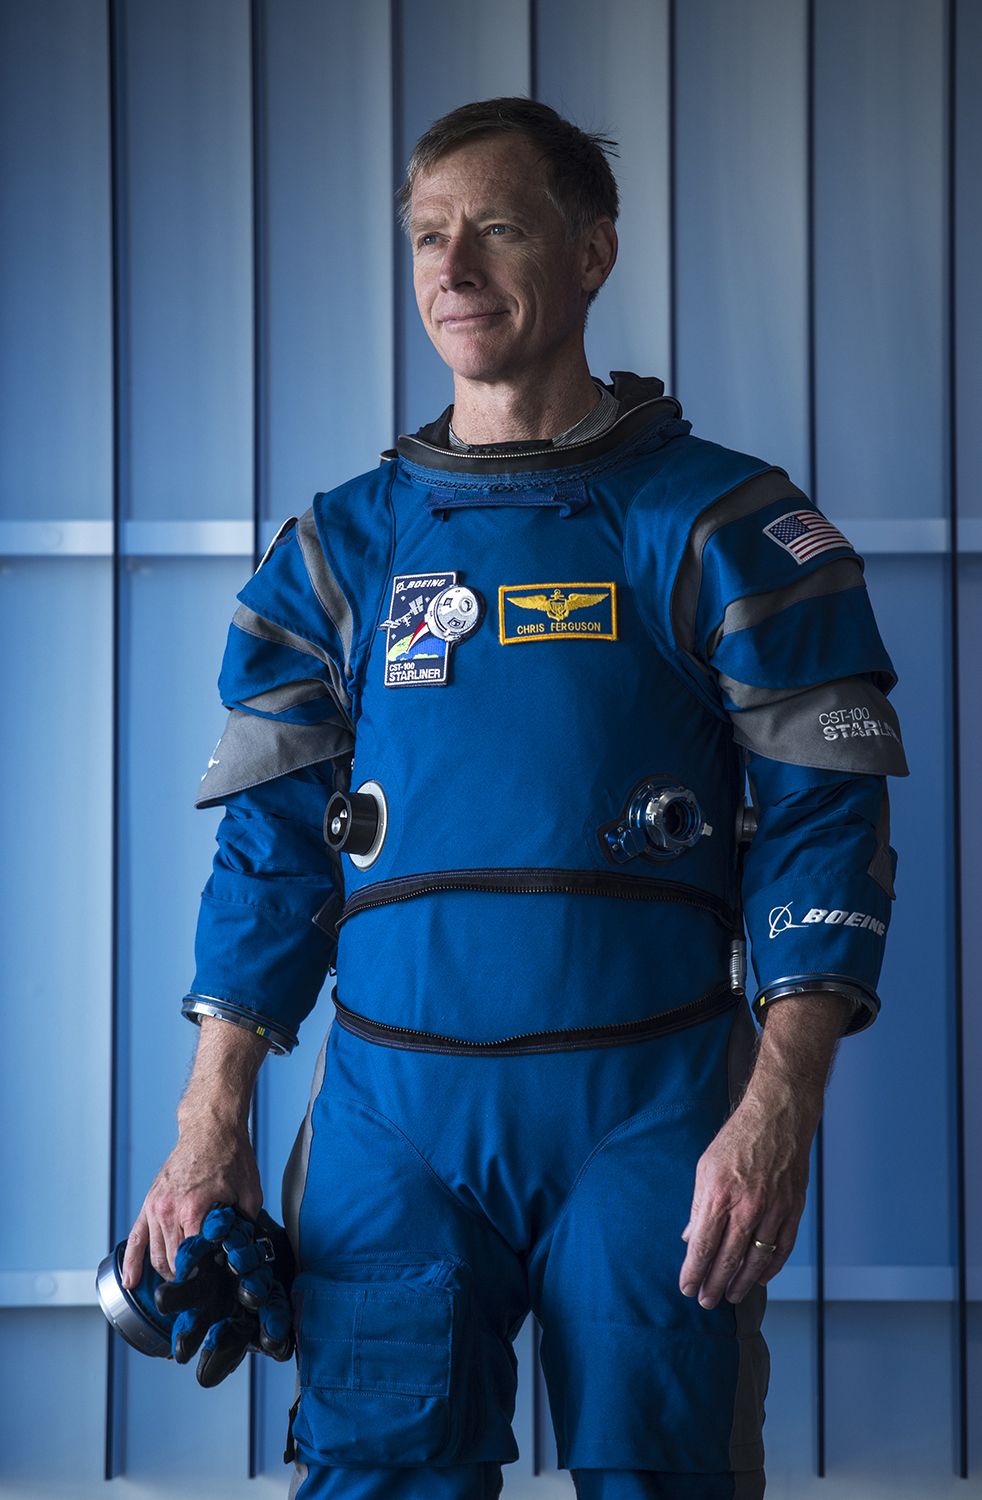 Former NASA astronaut Chris Ferguson